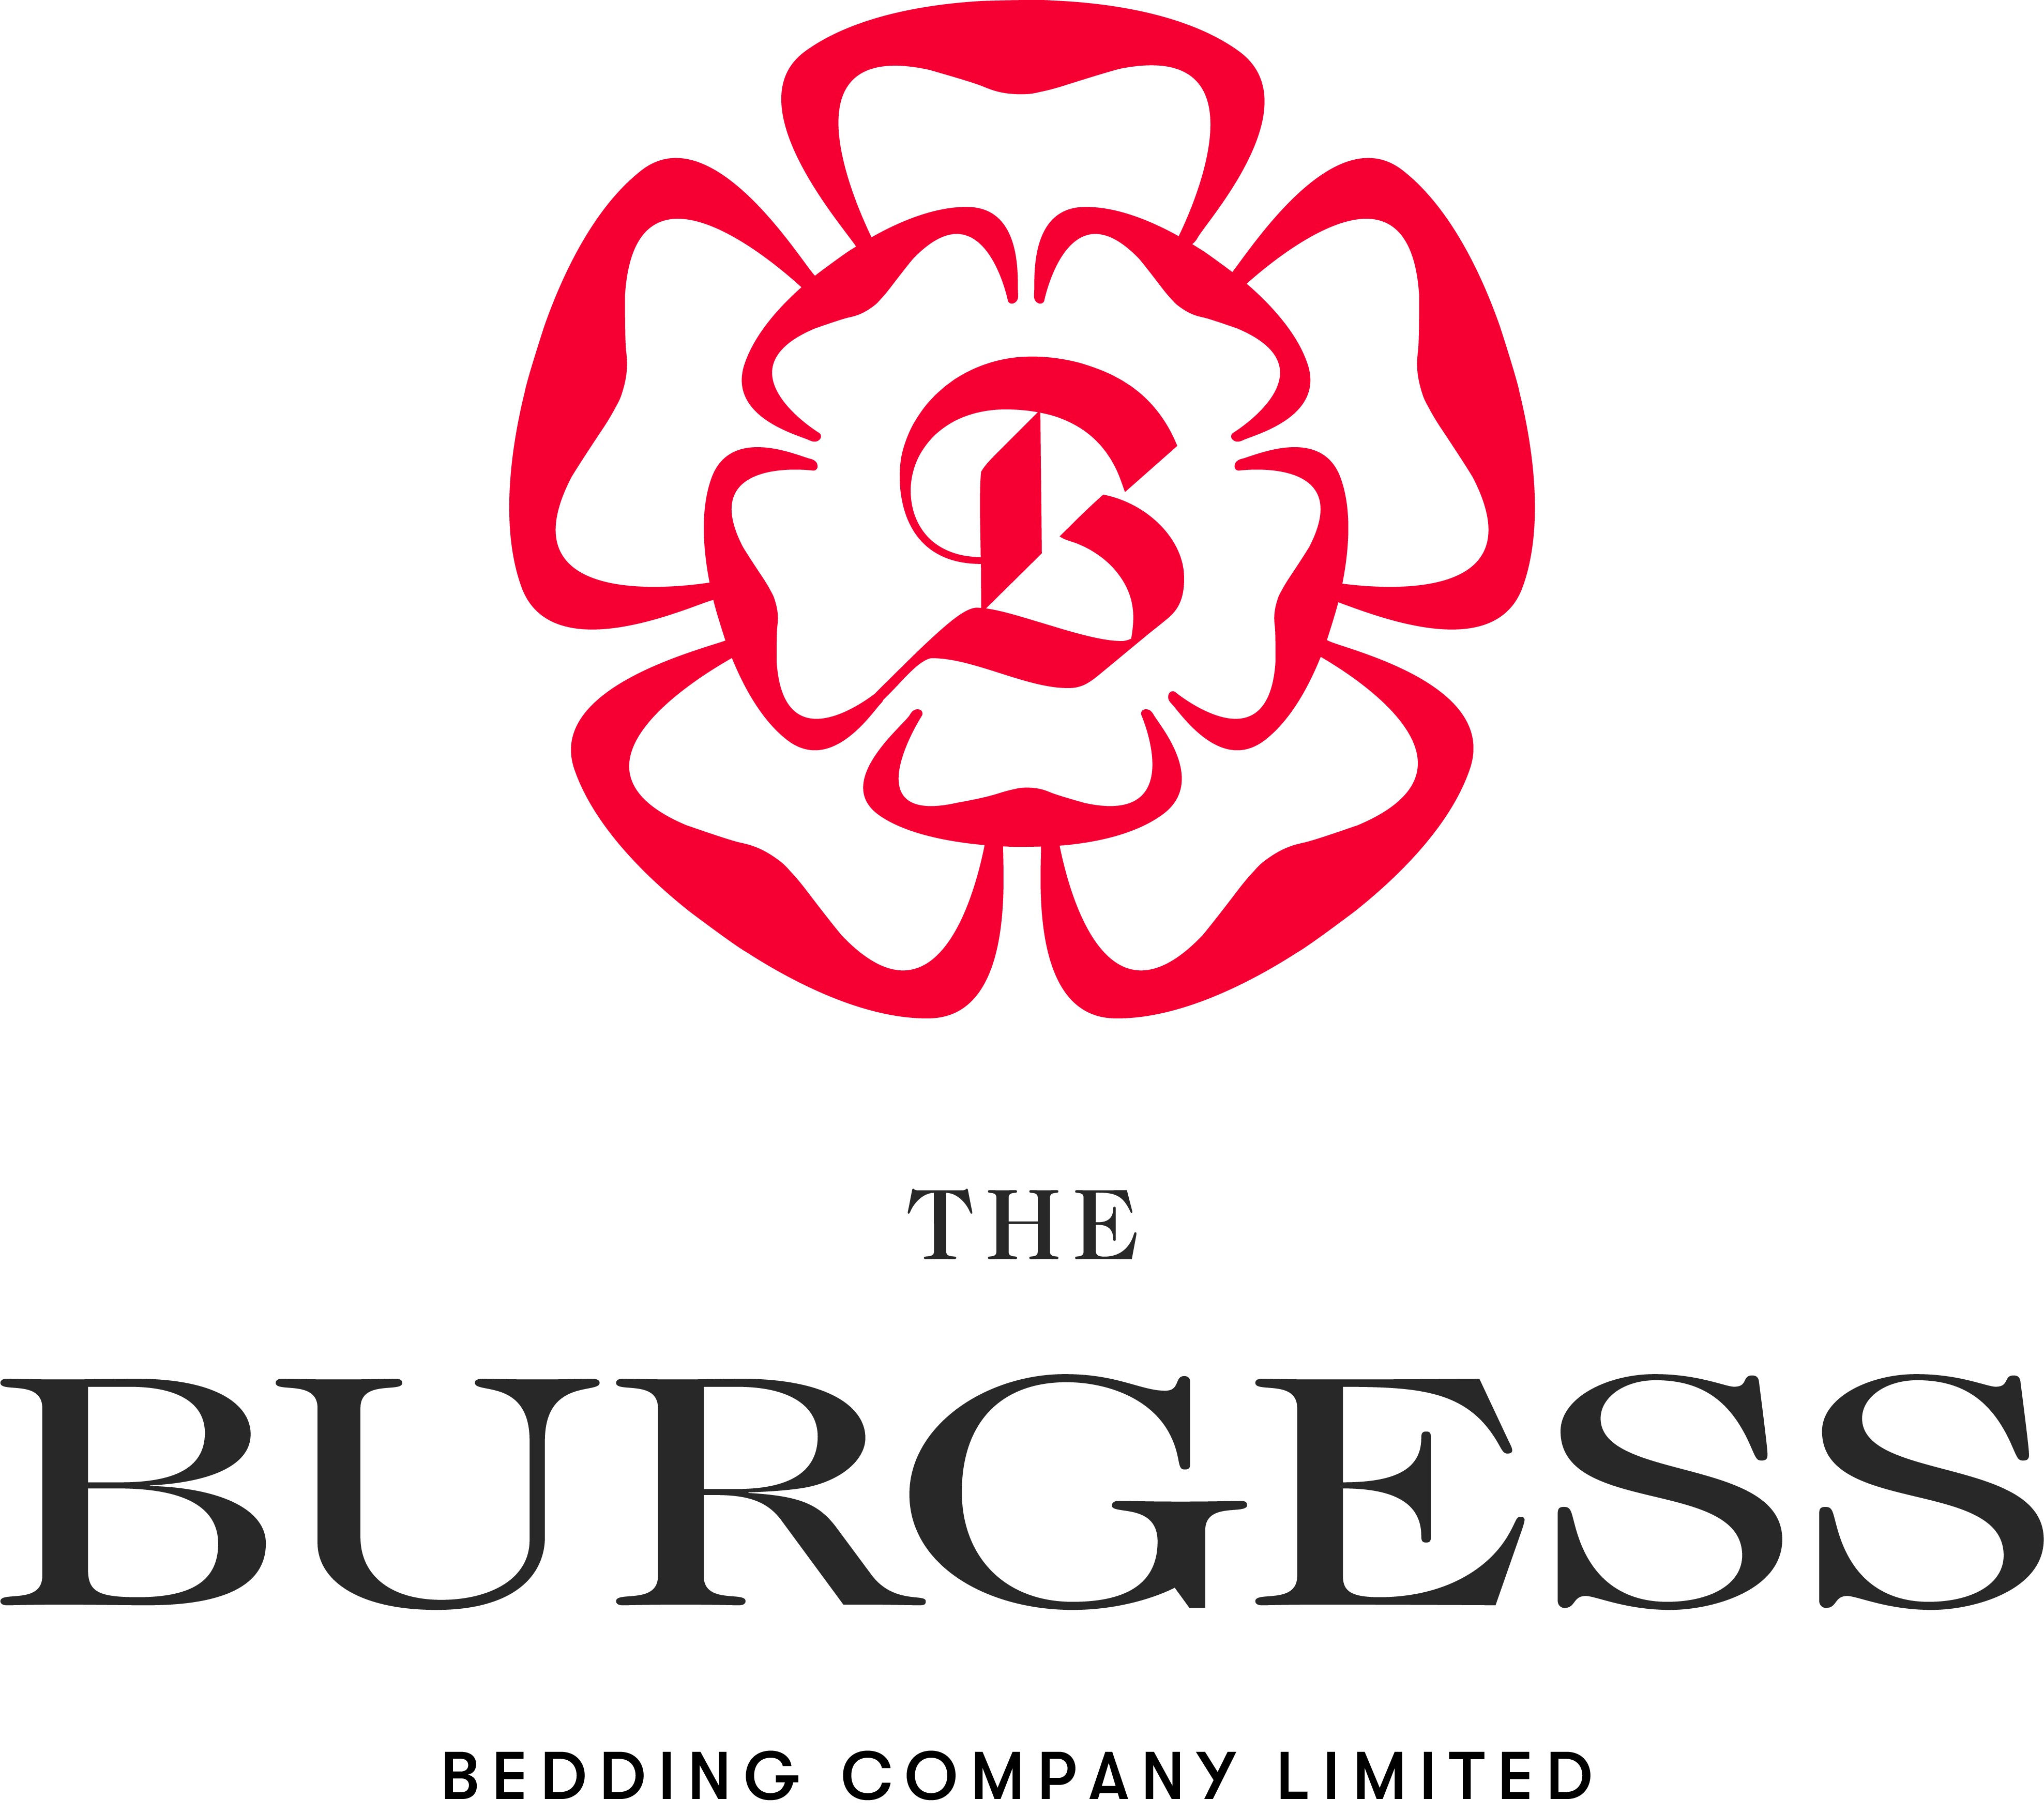 Burgess Bedding Company